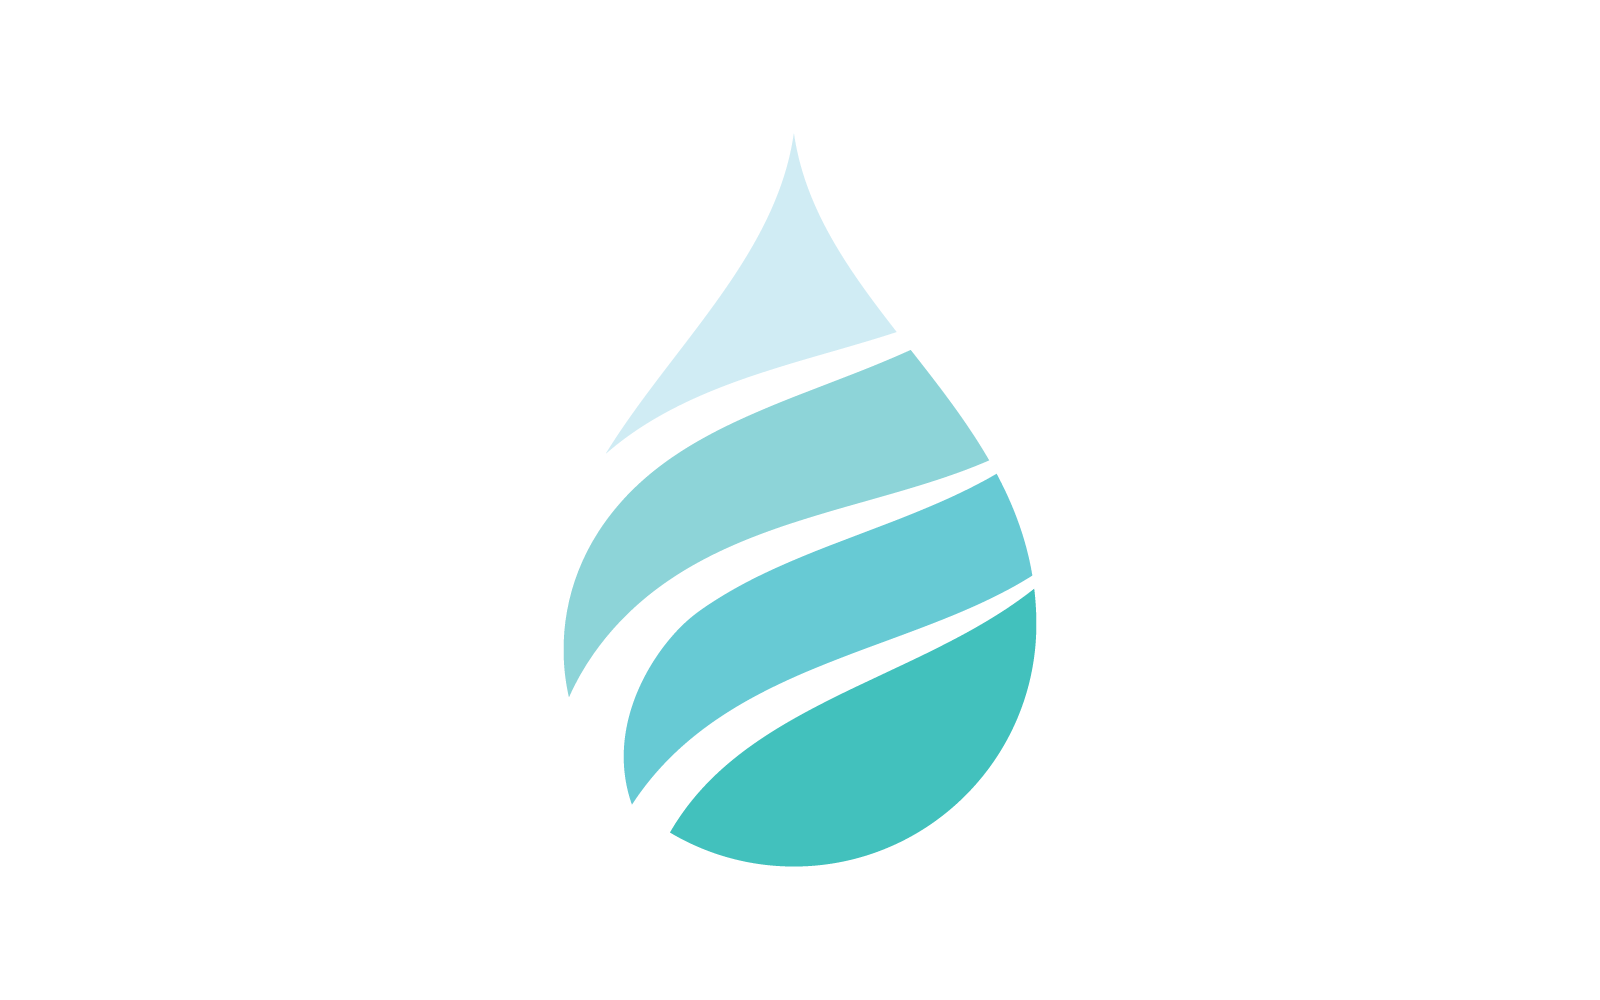 Water drop illustration logo icon vector flat design